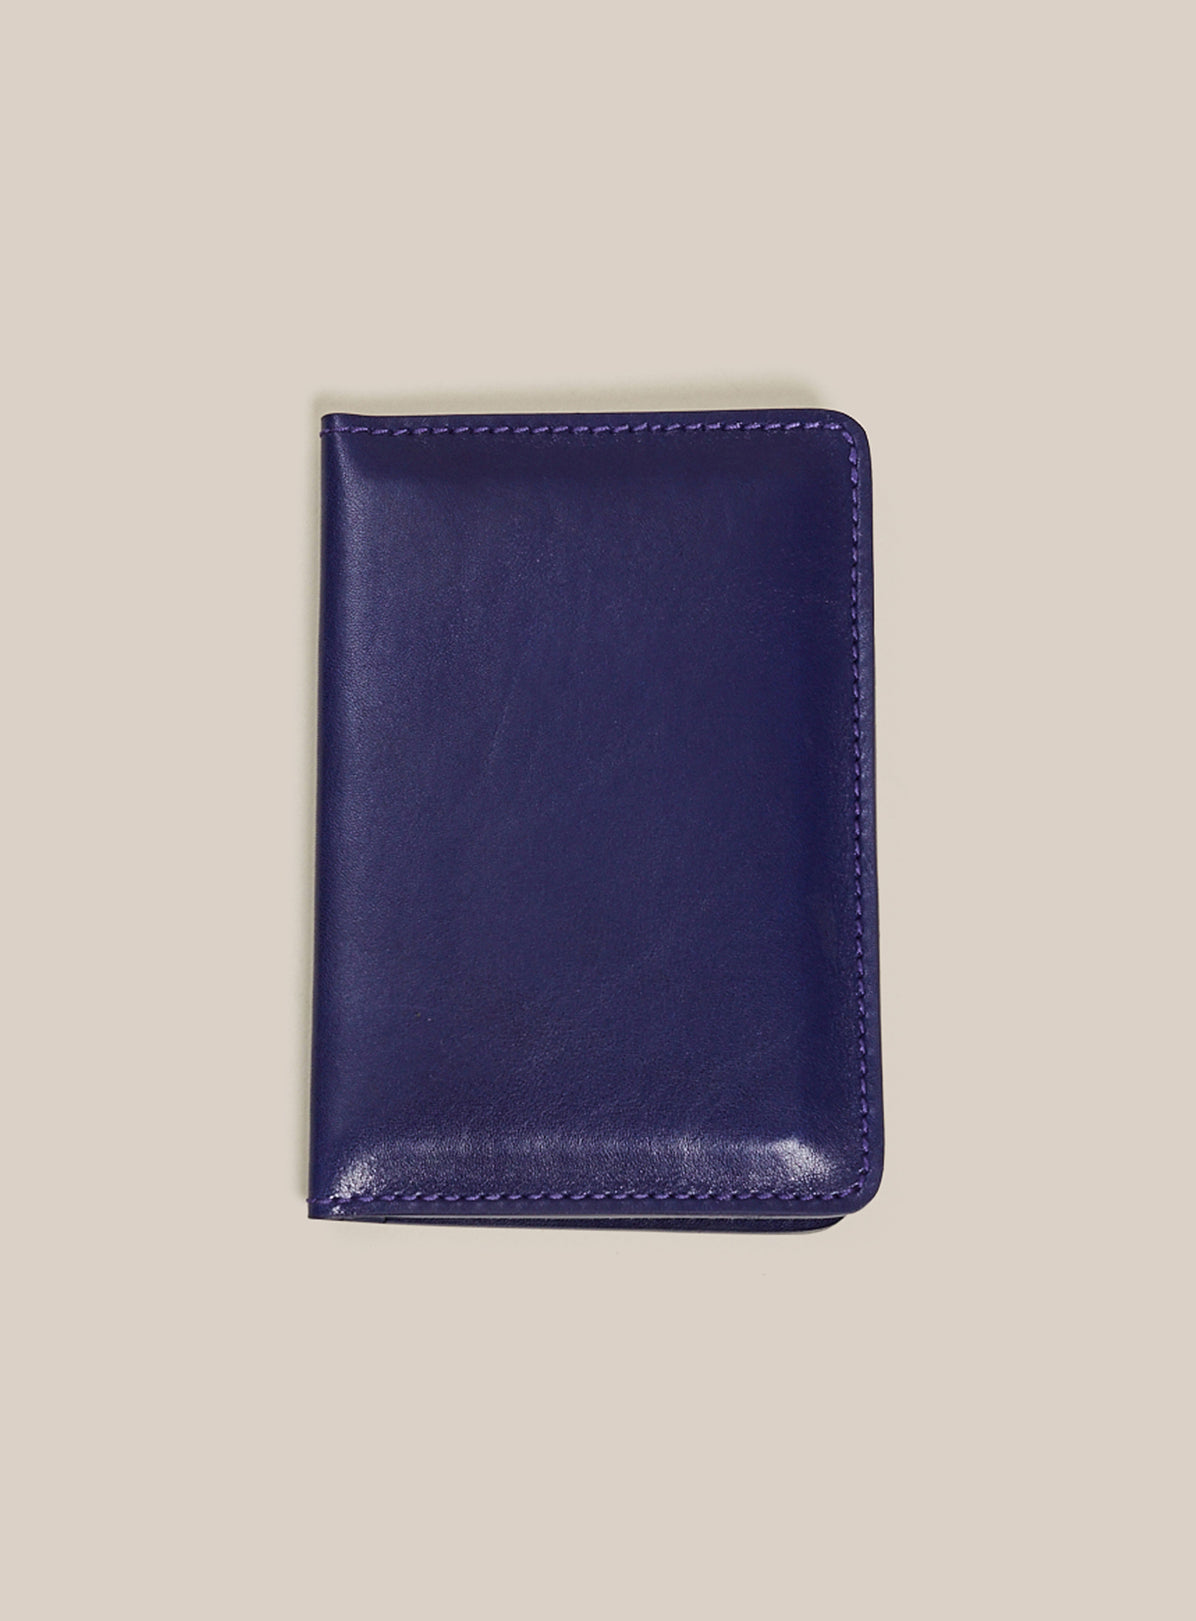 Passport Holder - Sabah Blue